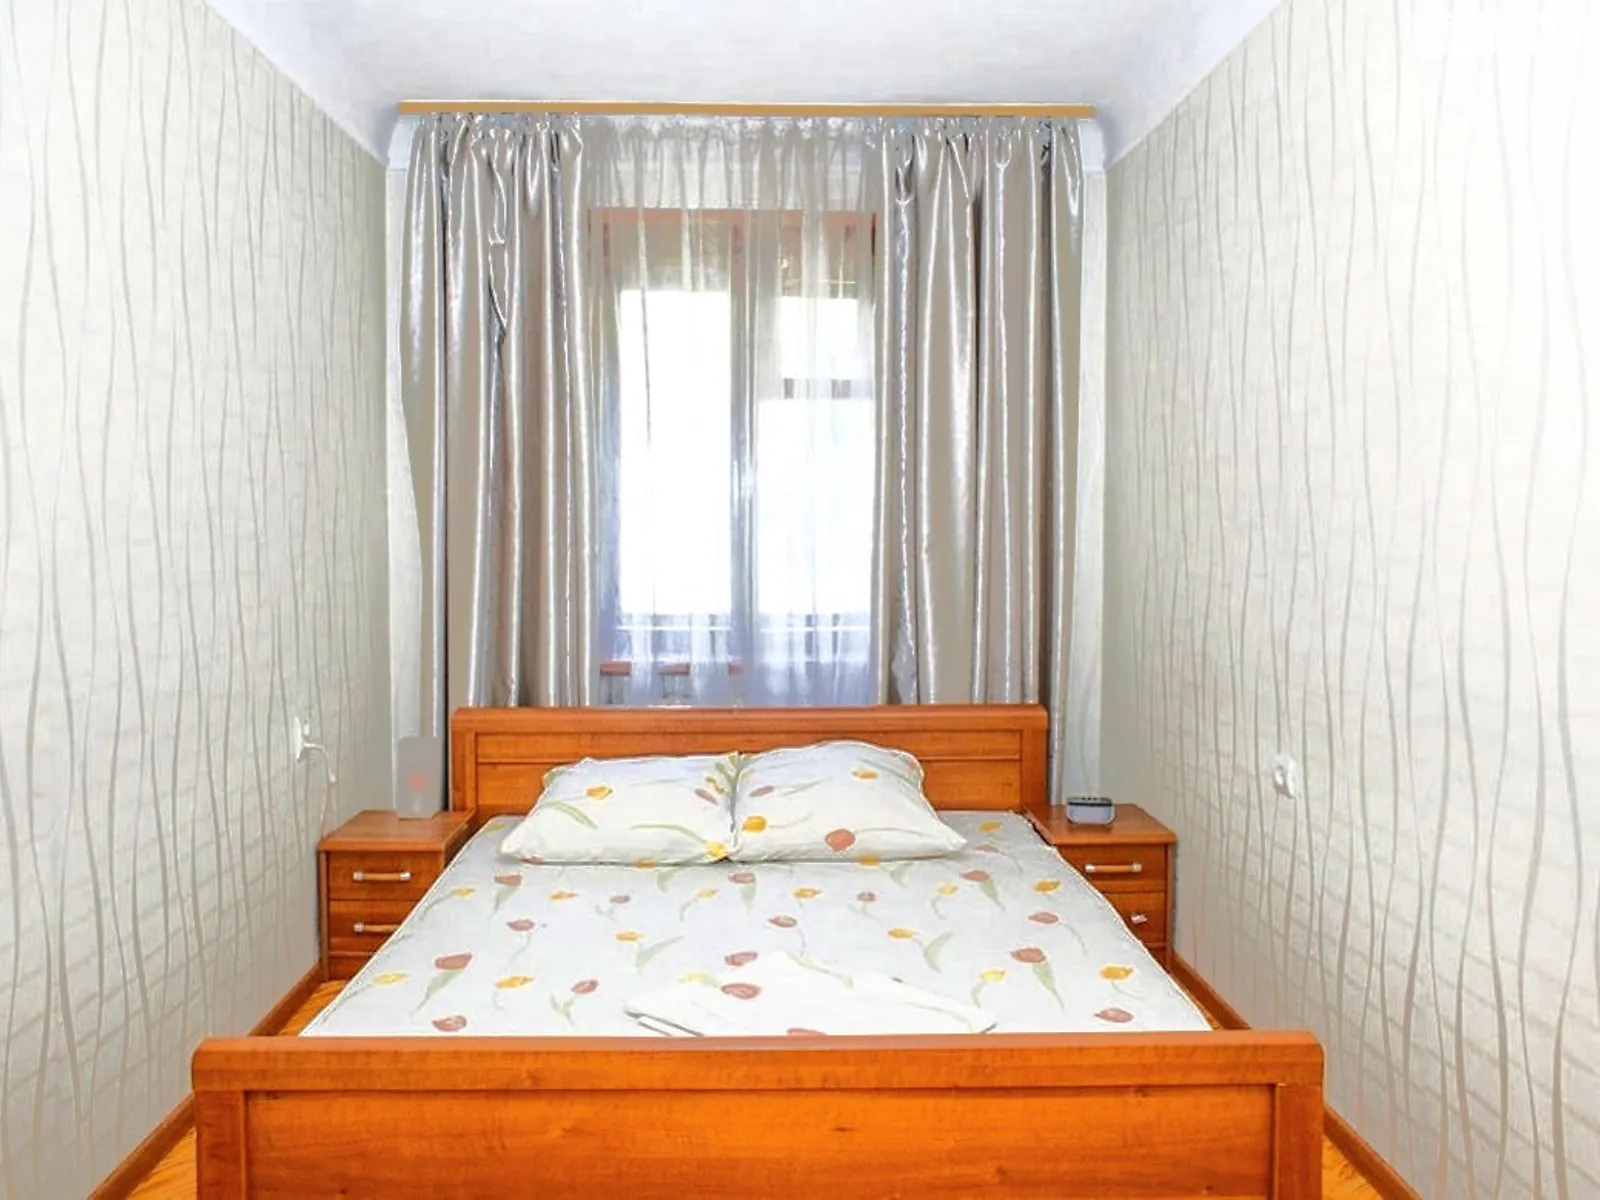 2-кімнатна квартира у Запоріжжі, цена: 750 грн